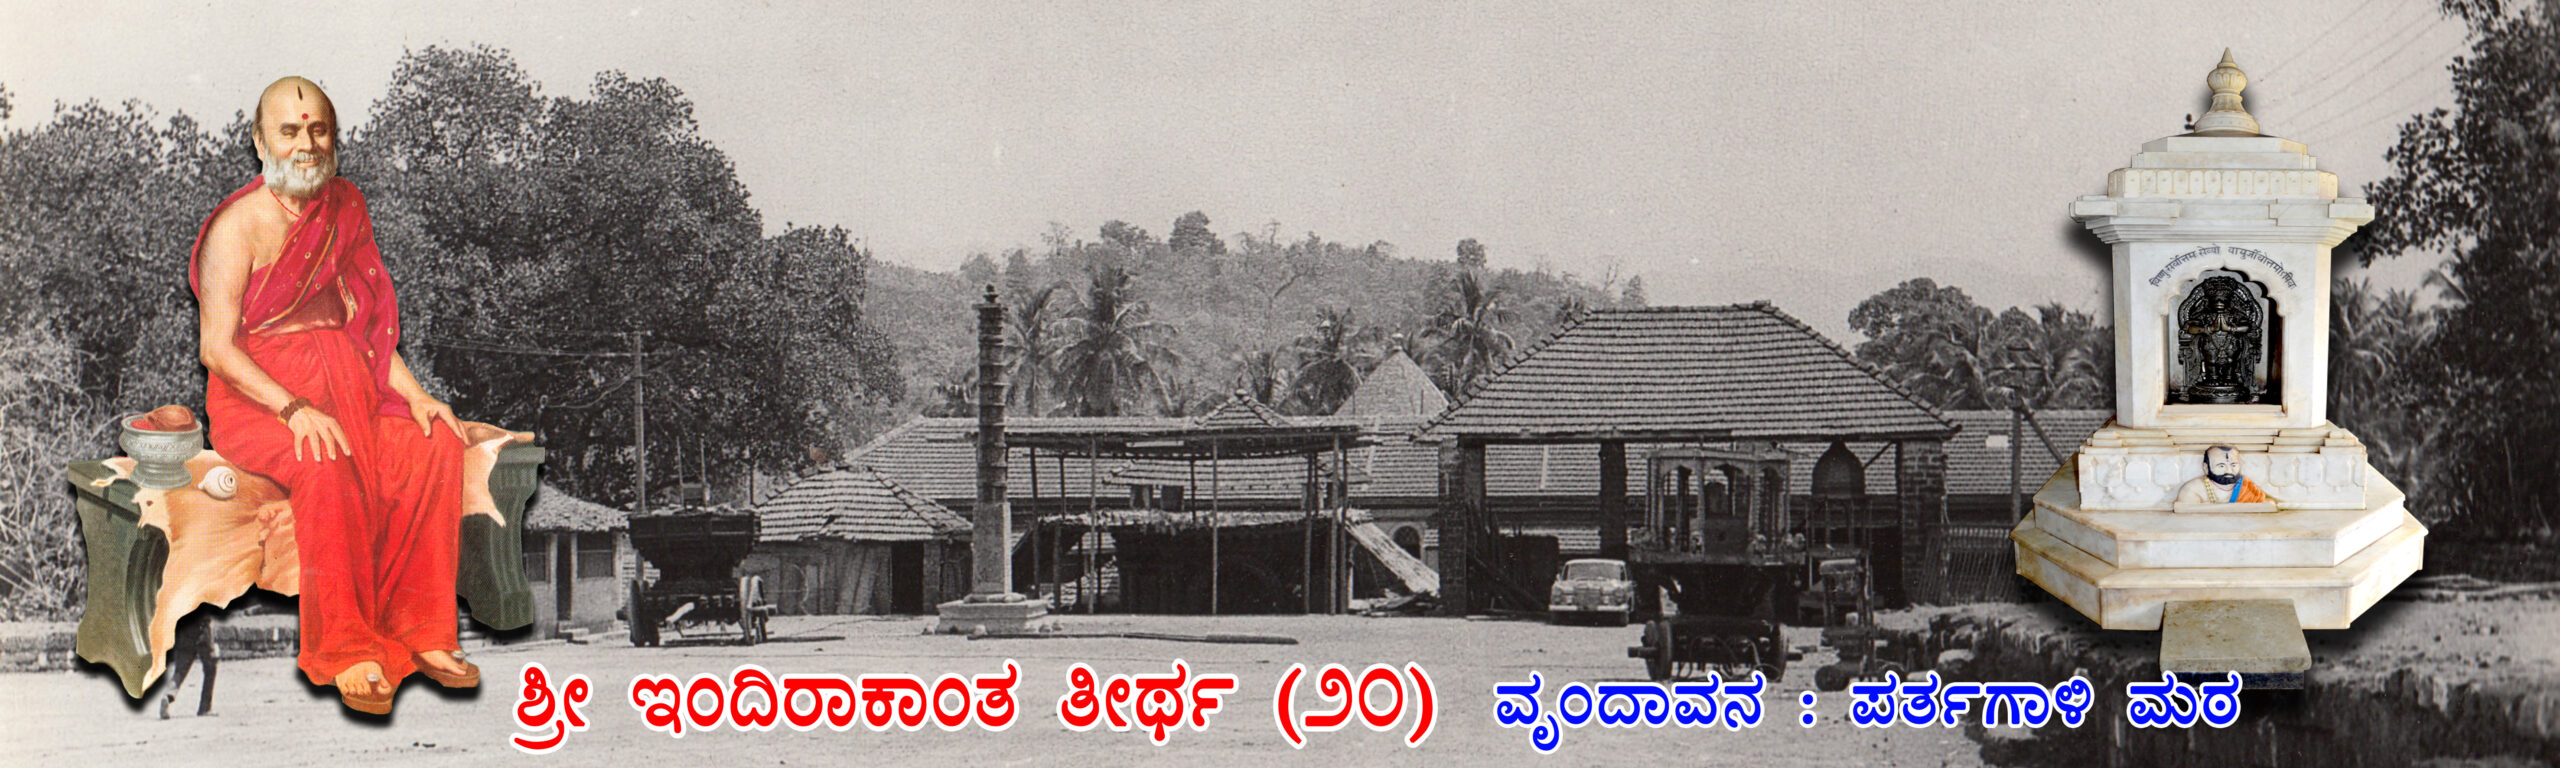 20 Indirakant Kannada